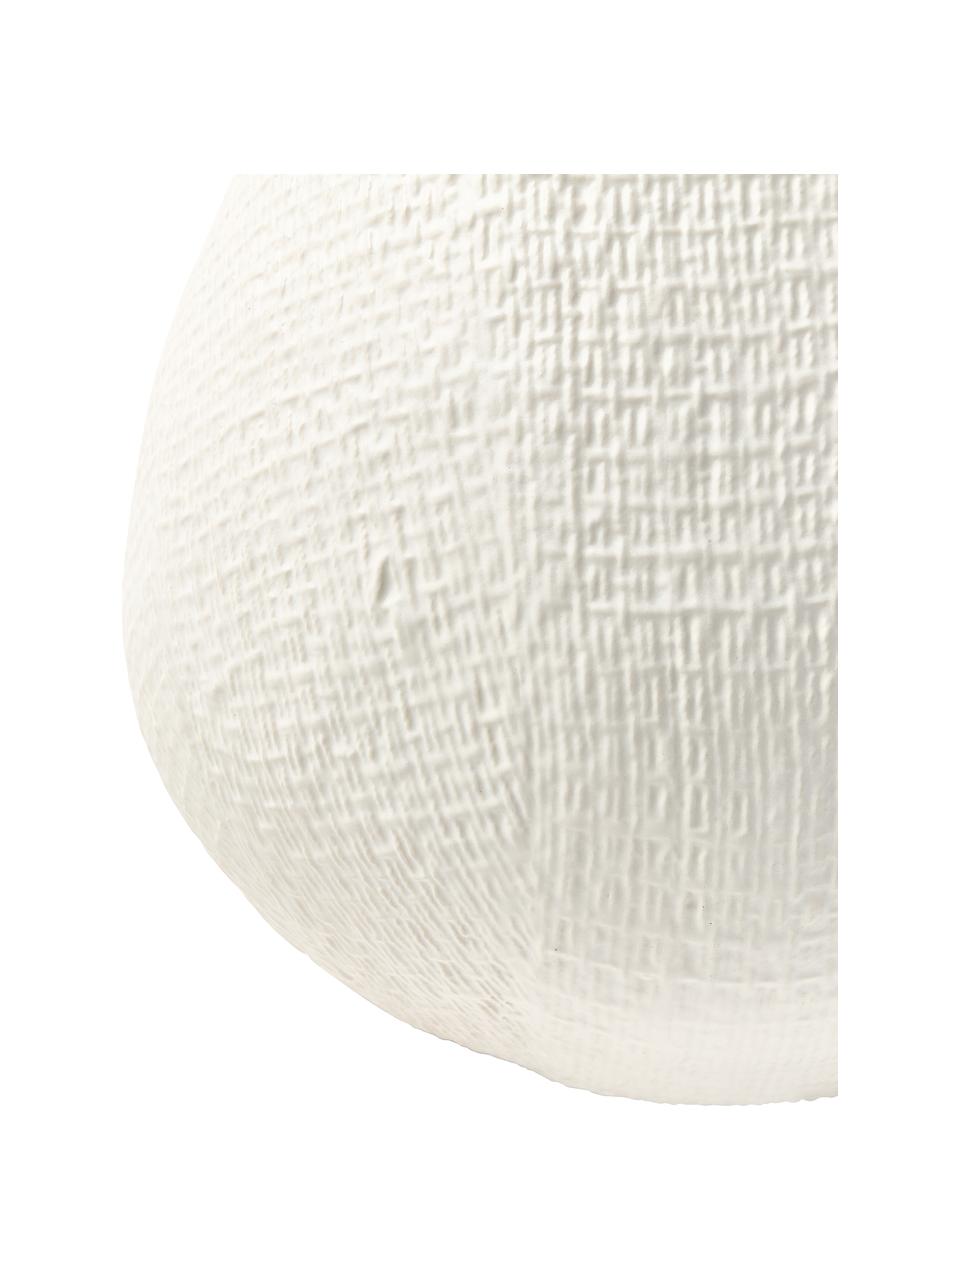 Vaso grande in ceramica fatto a mano Wendy, Ceramica, Bianco crema, Ø 23 x Alt. 24 cm